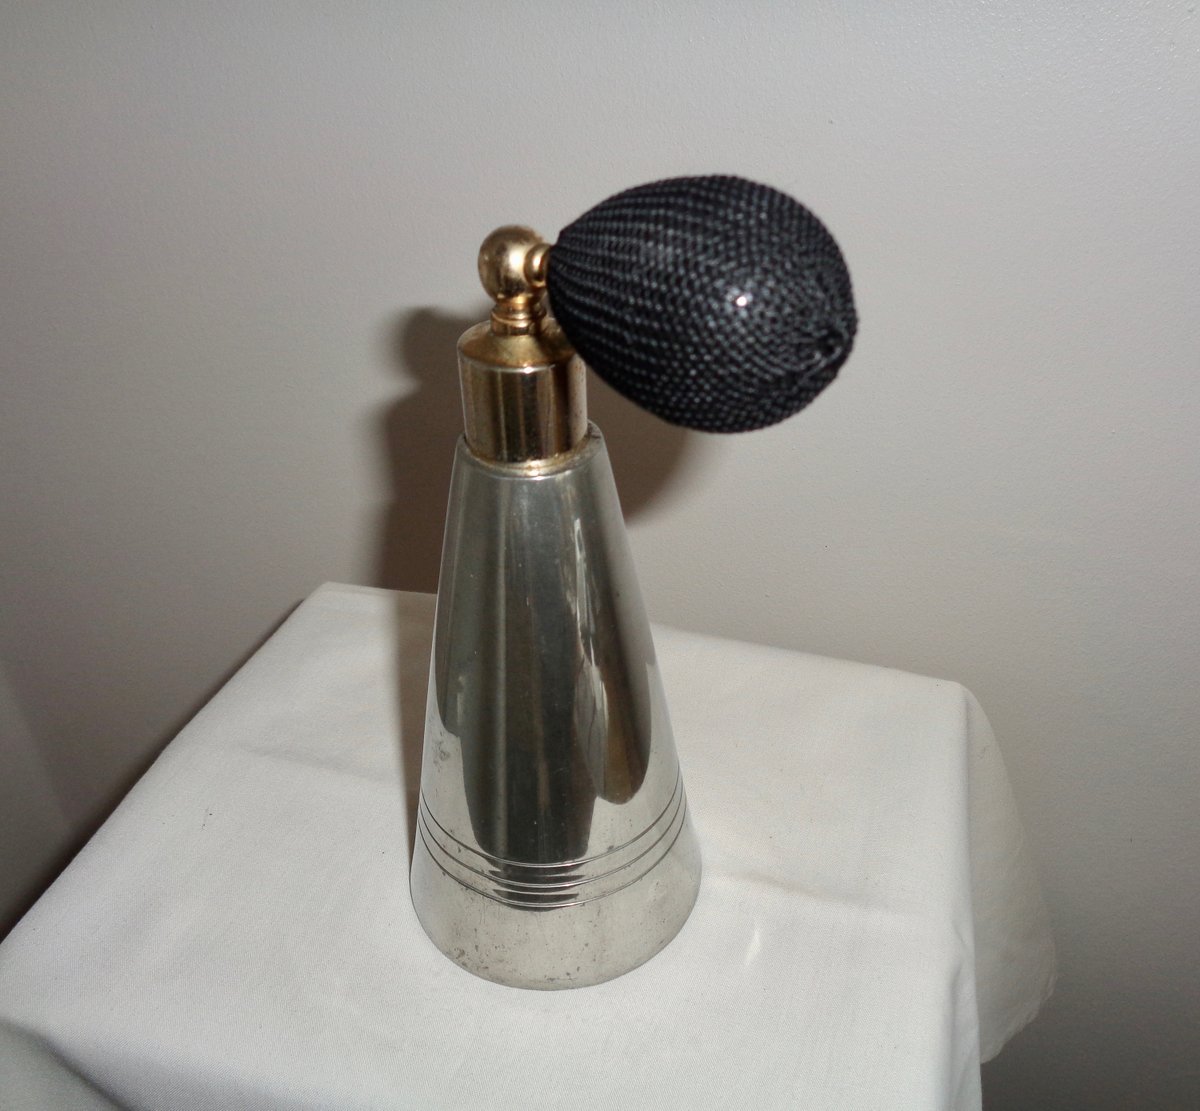 Vintage English Pewter Perfume/ Aftershave Spray Bottle etsy.me/3ieCSL9 #silver #aftershavebottle #perfumeatomiser #perfumebottles #pewter #pewtercollectibles #englishpewter #spraybottle #fragrancespray #mullardantiques